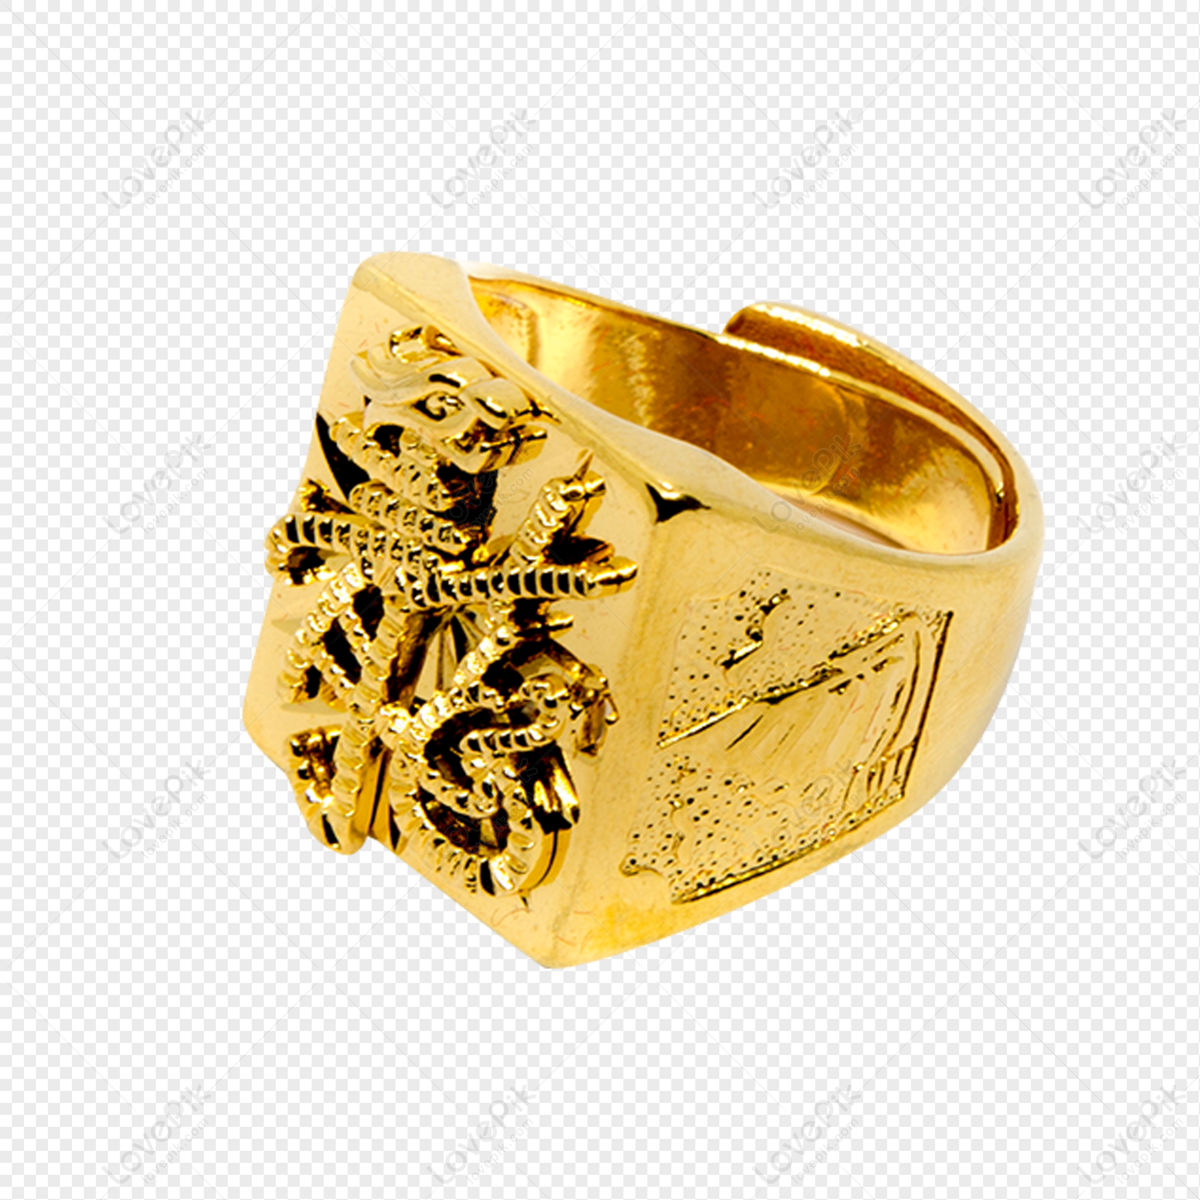 lovepik golden ring png image 402016809 wh1200